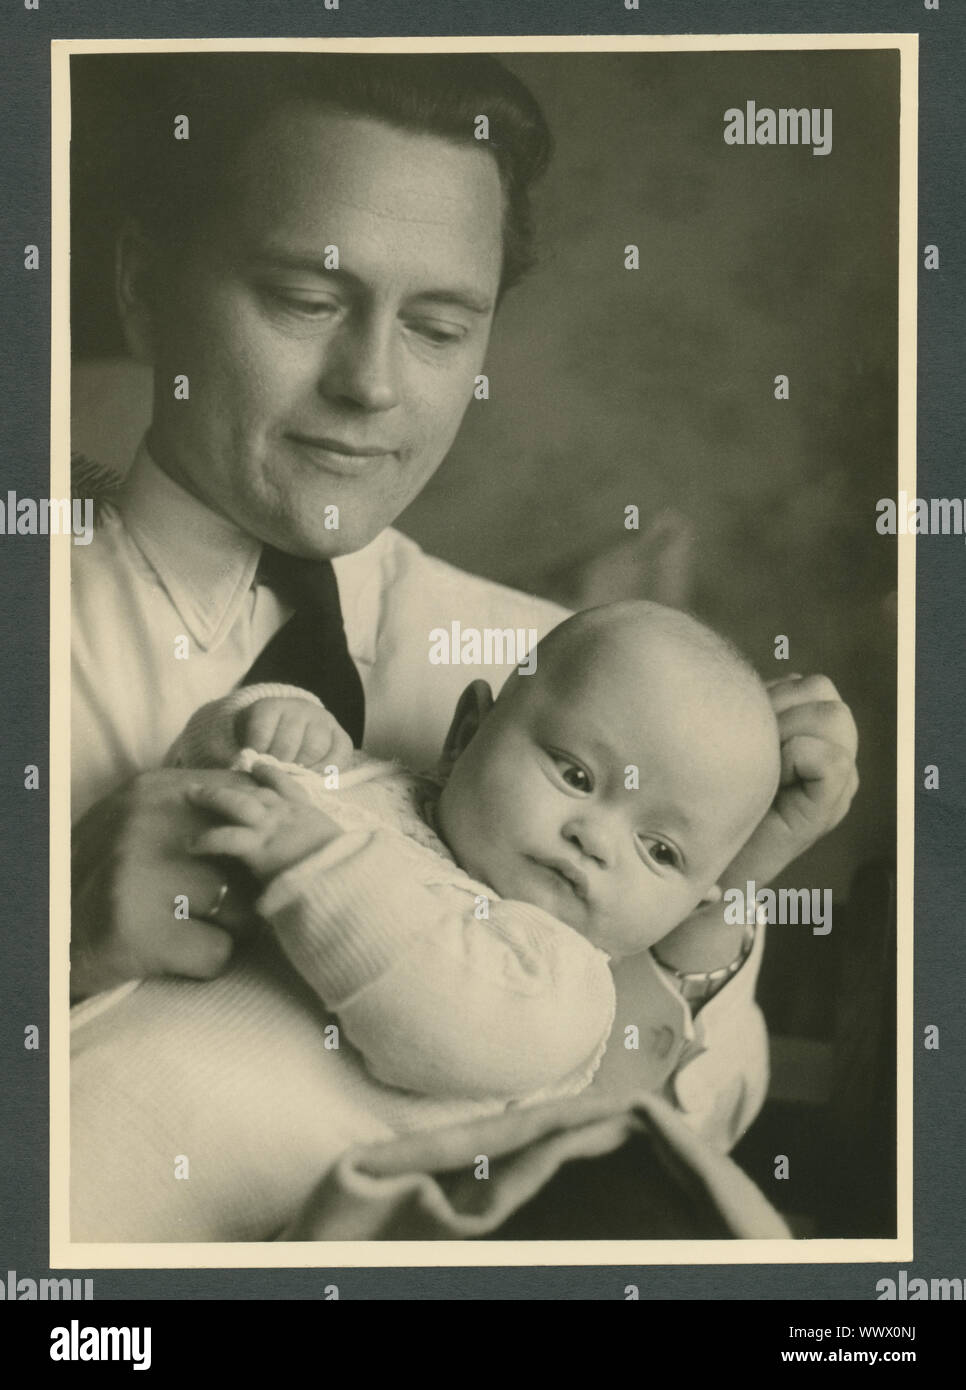 Europa, Deutschland, Amburgo, stolzer Vater mit seinem Baby , 1950er Jahre . / Europa, Germania, Amburgo, orgogliosa di padre con il suo bambino, 1950th . Foto Stock